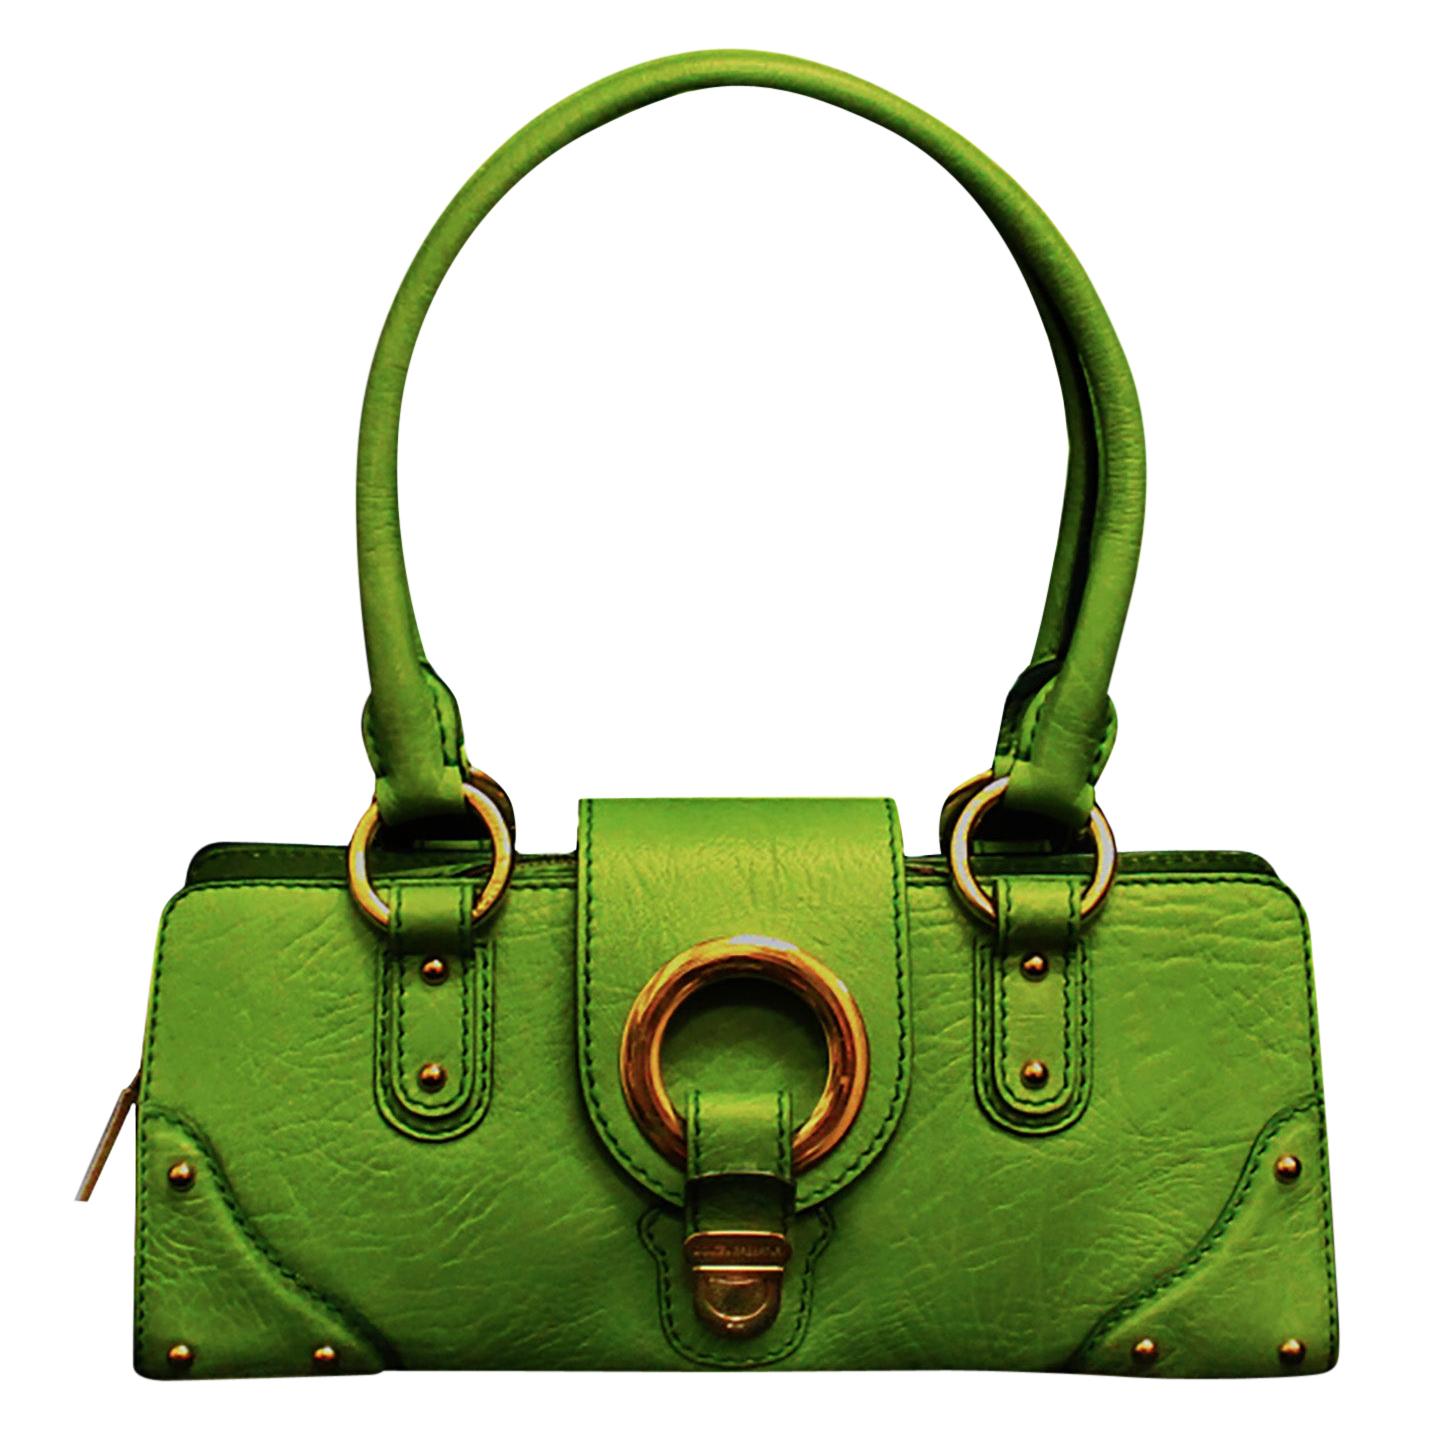 Dolce & Gabbana Green Grain Leather Top Handle Bag W/ Gold Tone Hardware